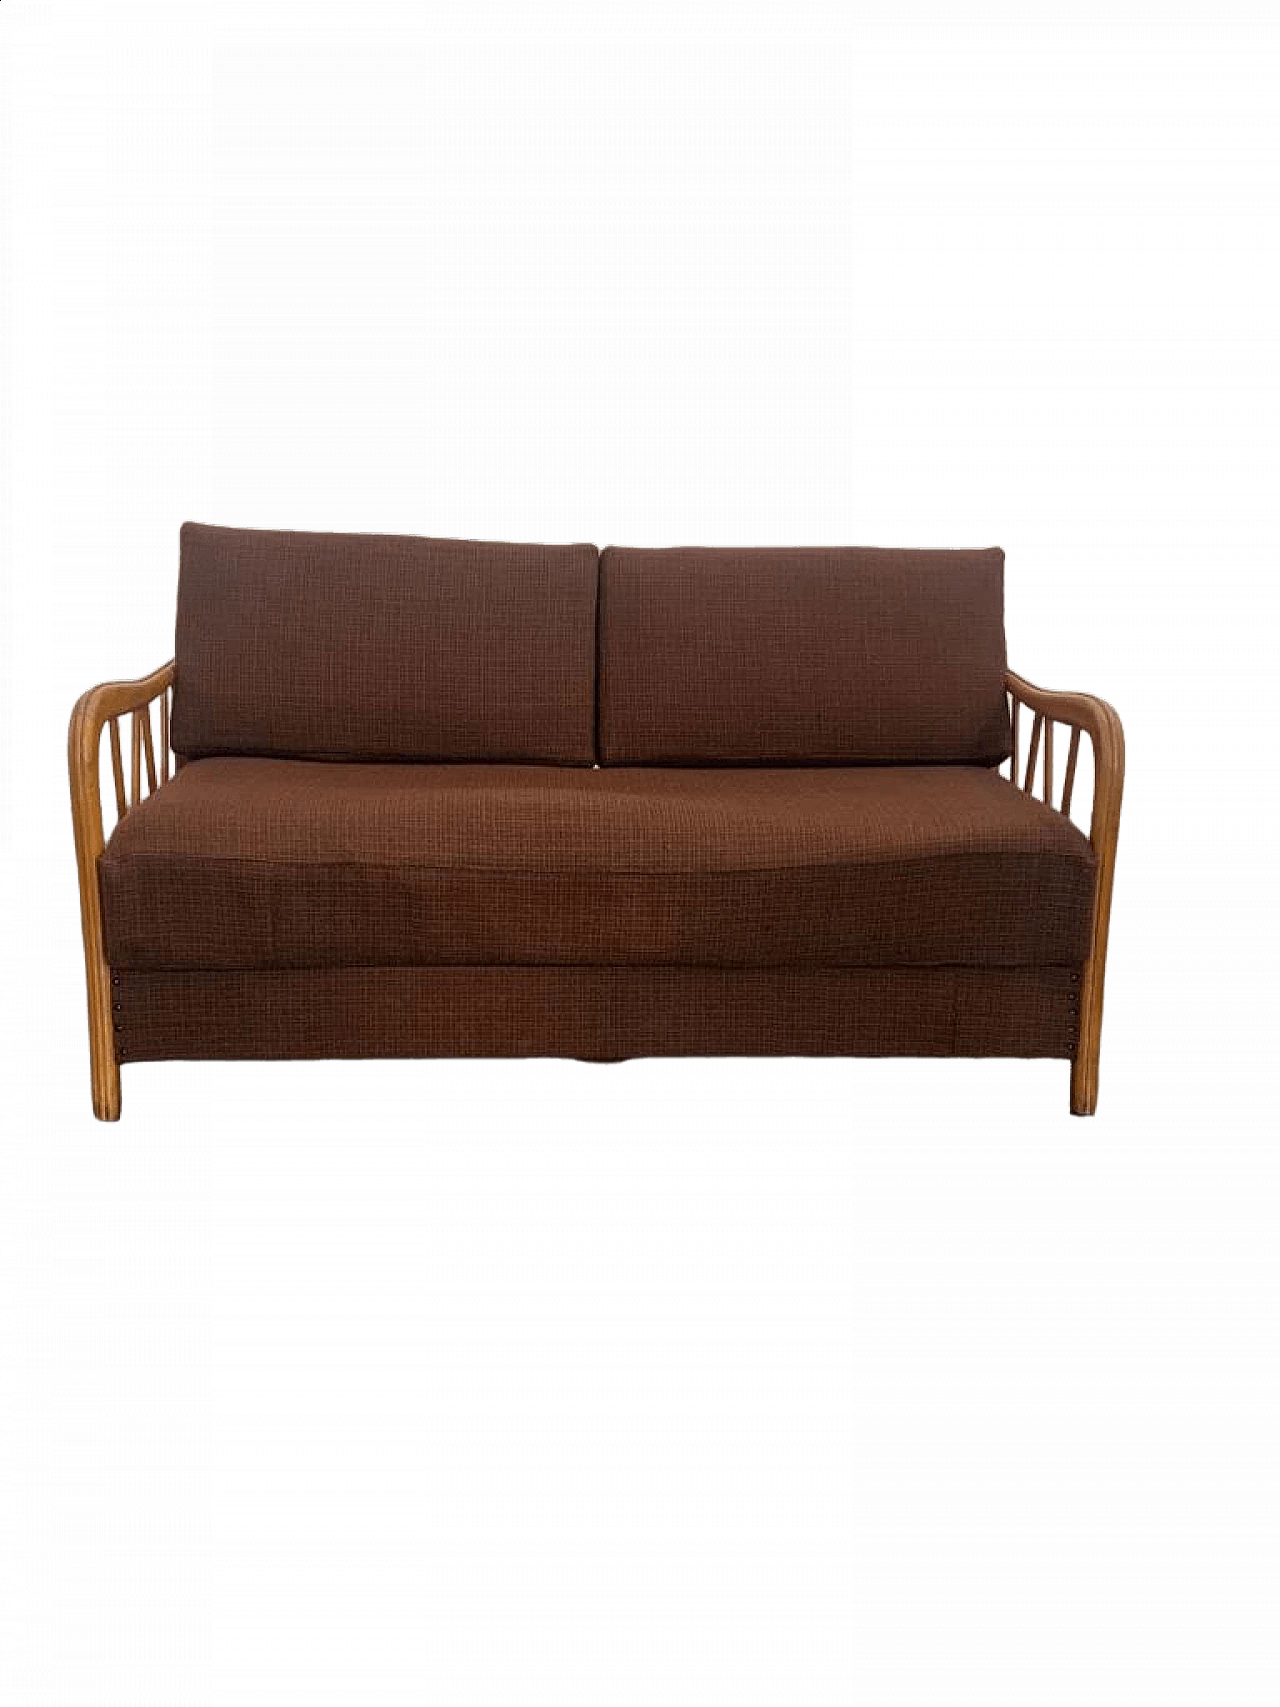 2-seater cherry wood sofa by Paolo Buffa, 1960s 1471072